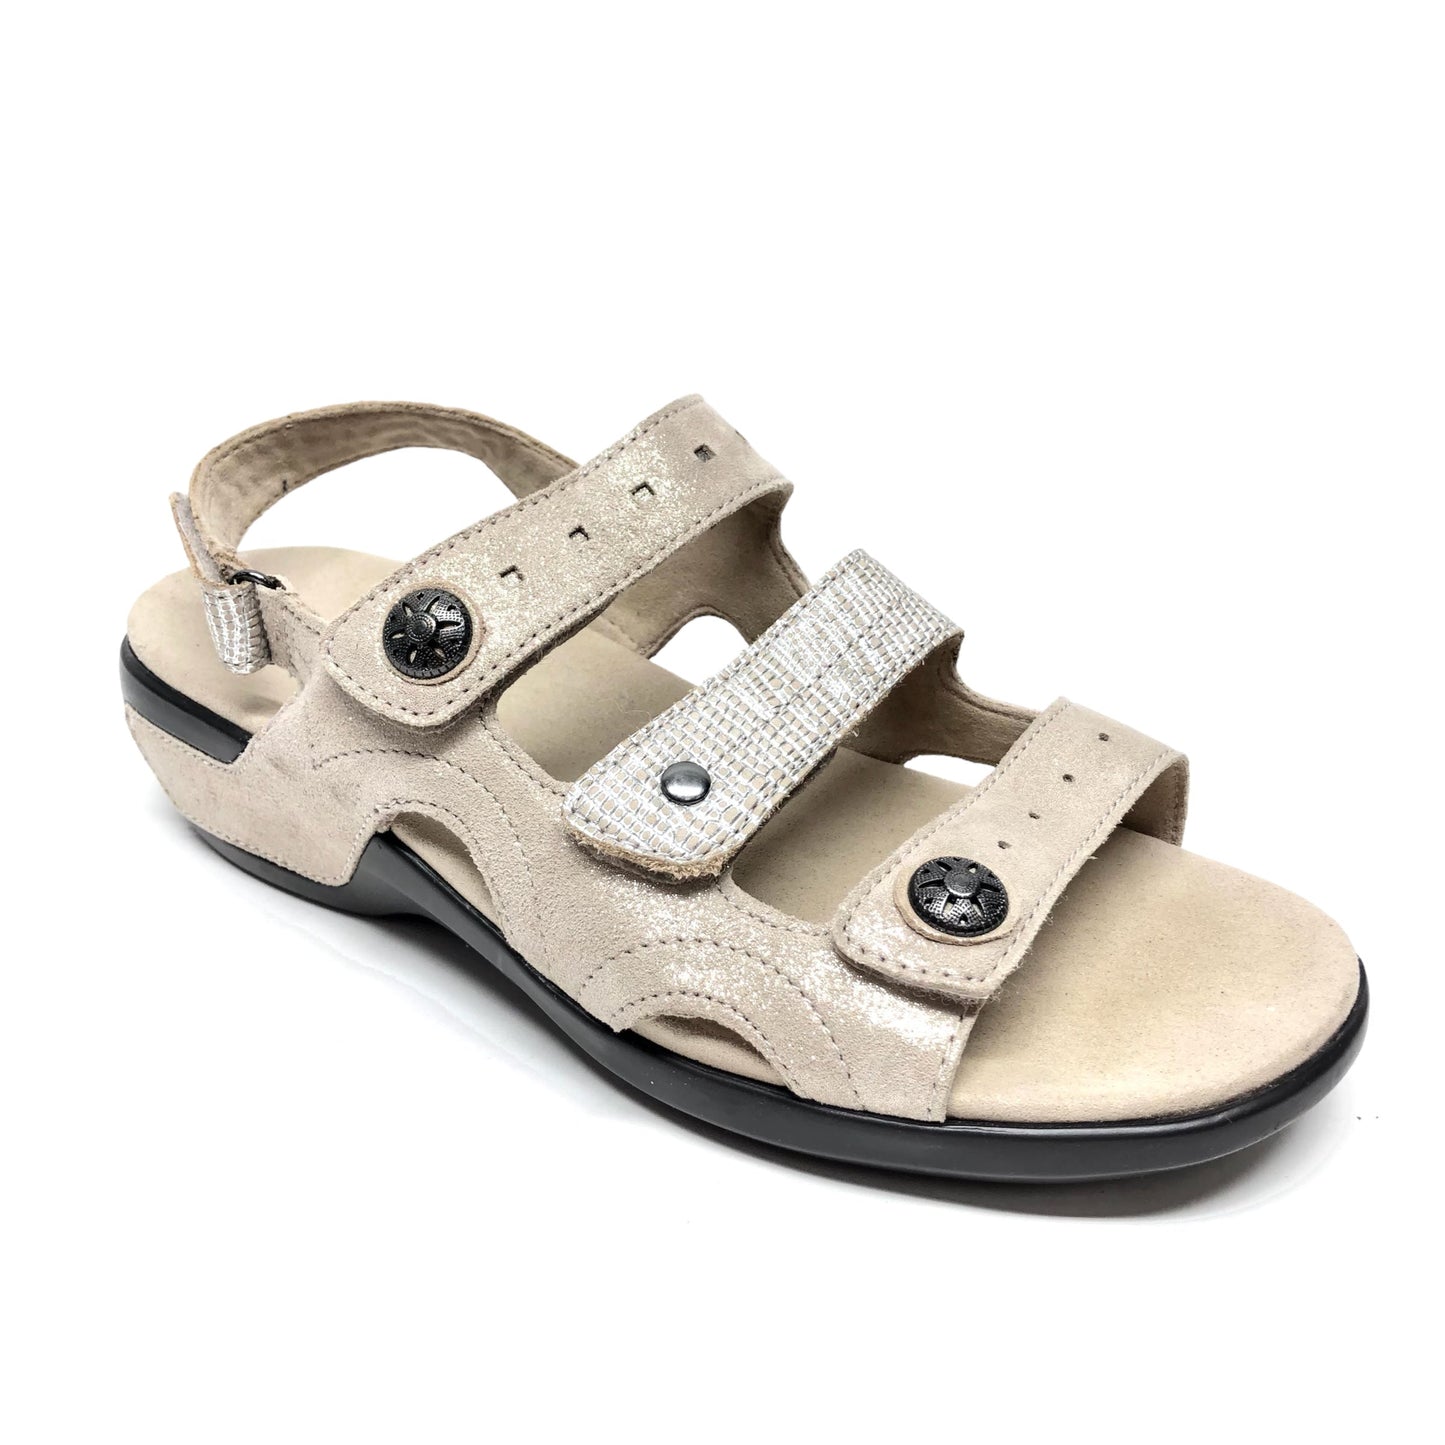 Beige Sandals Flats Clothes Mentor, Size 7